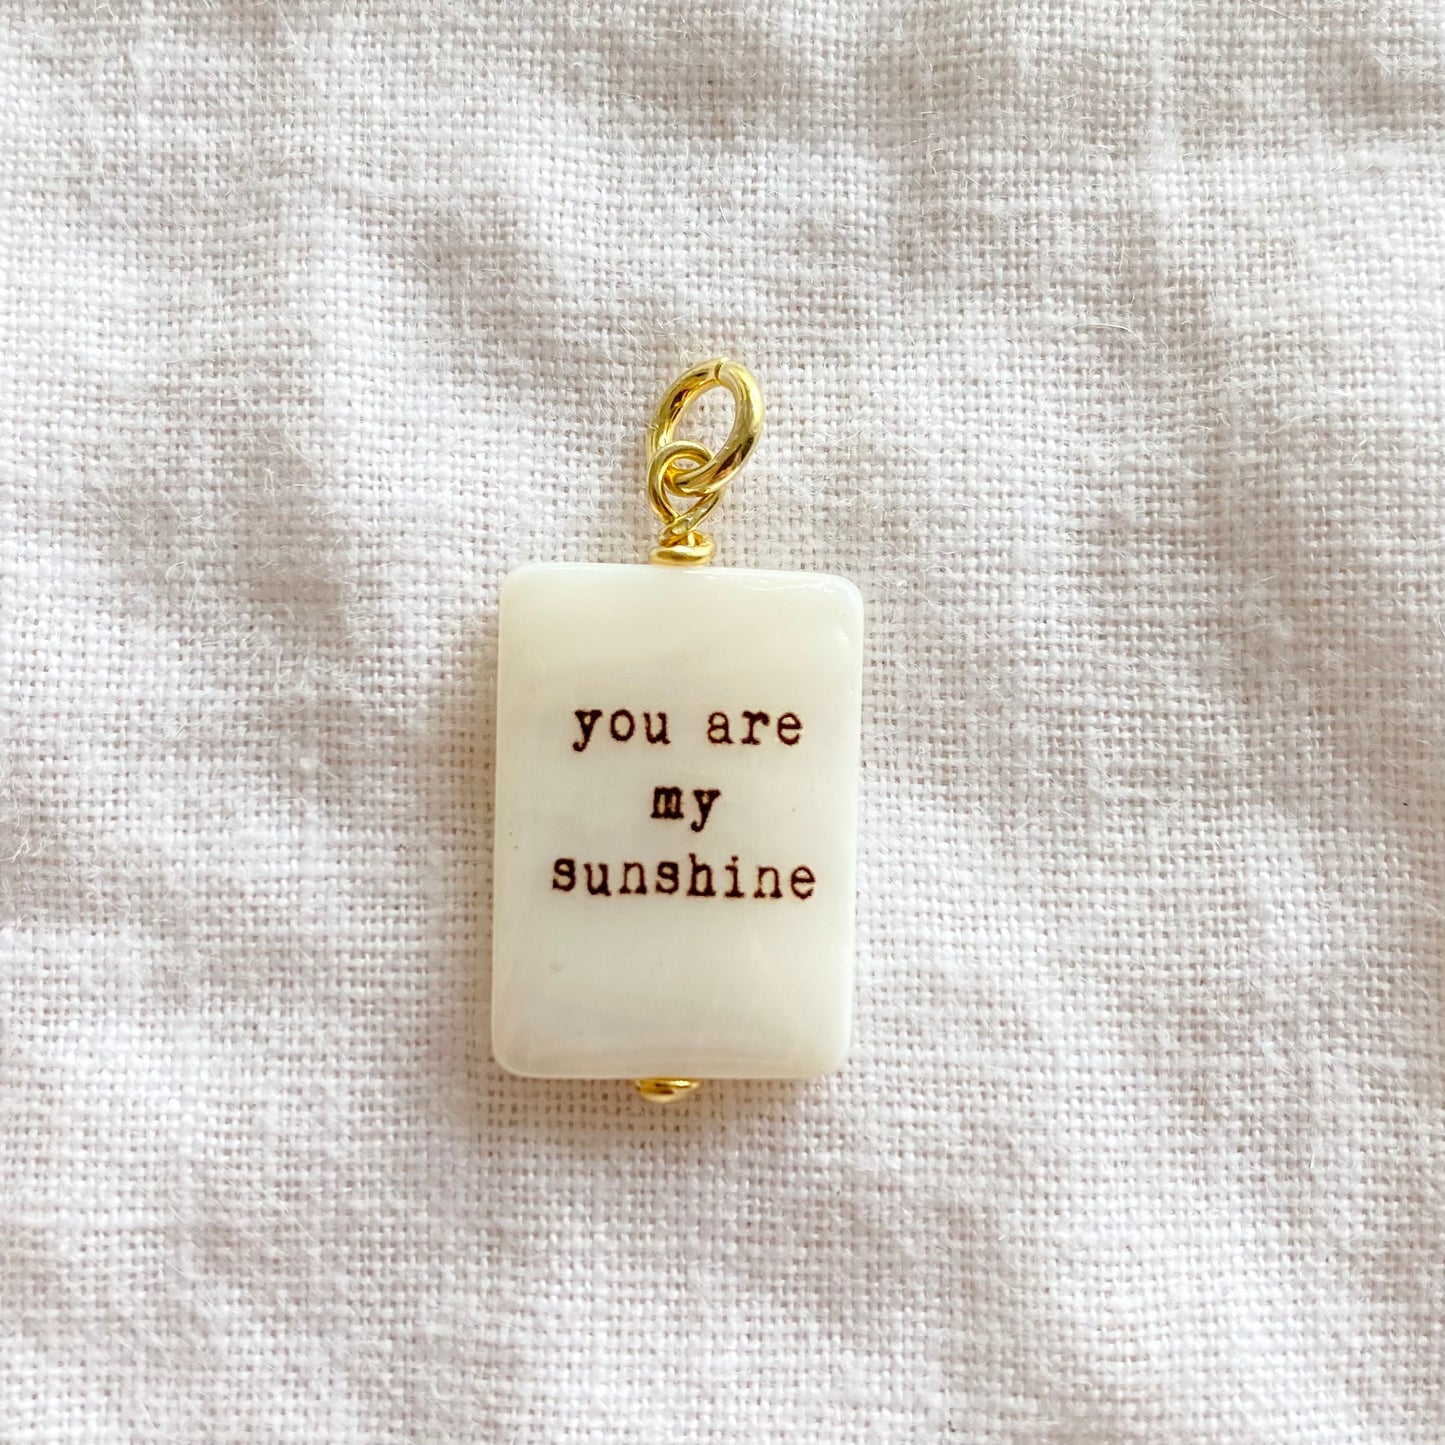 You are my sunshine pendant